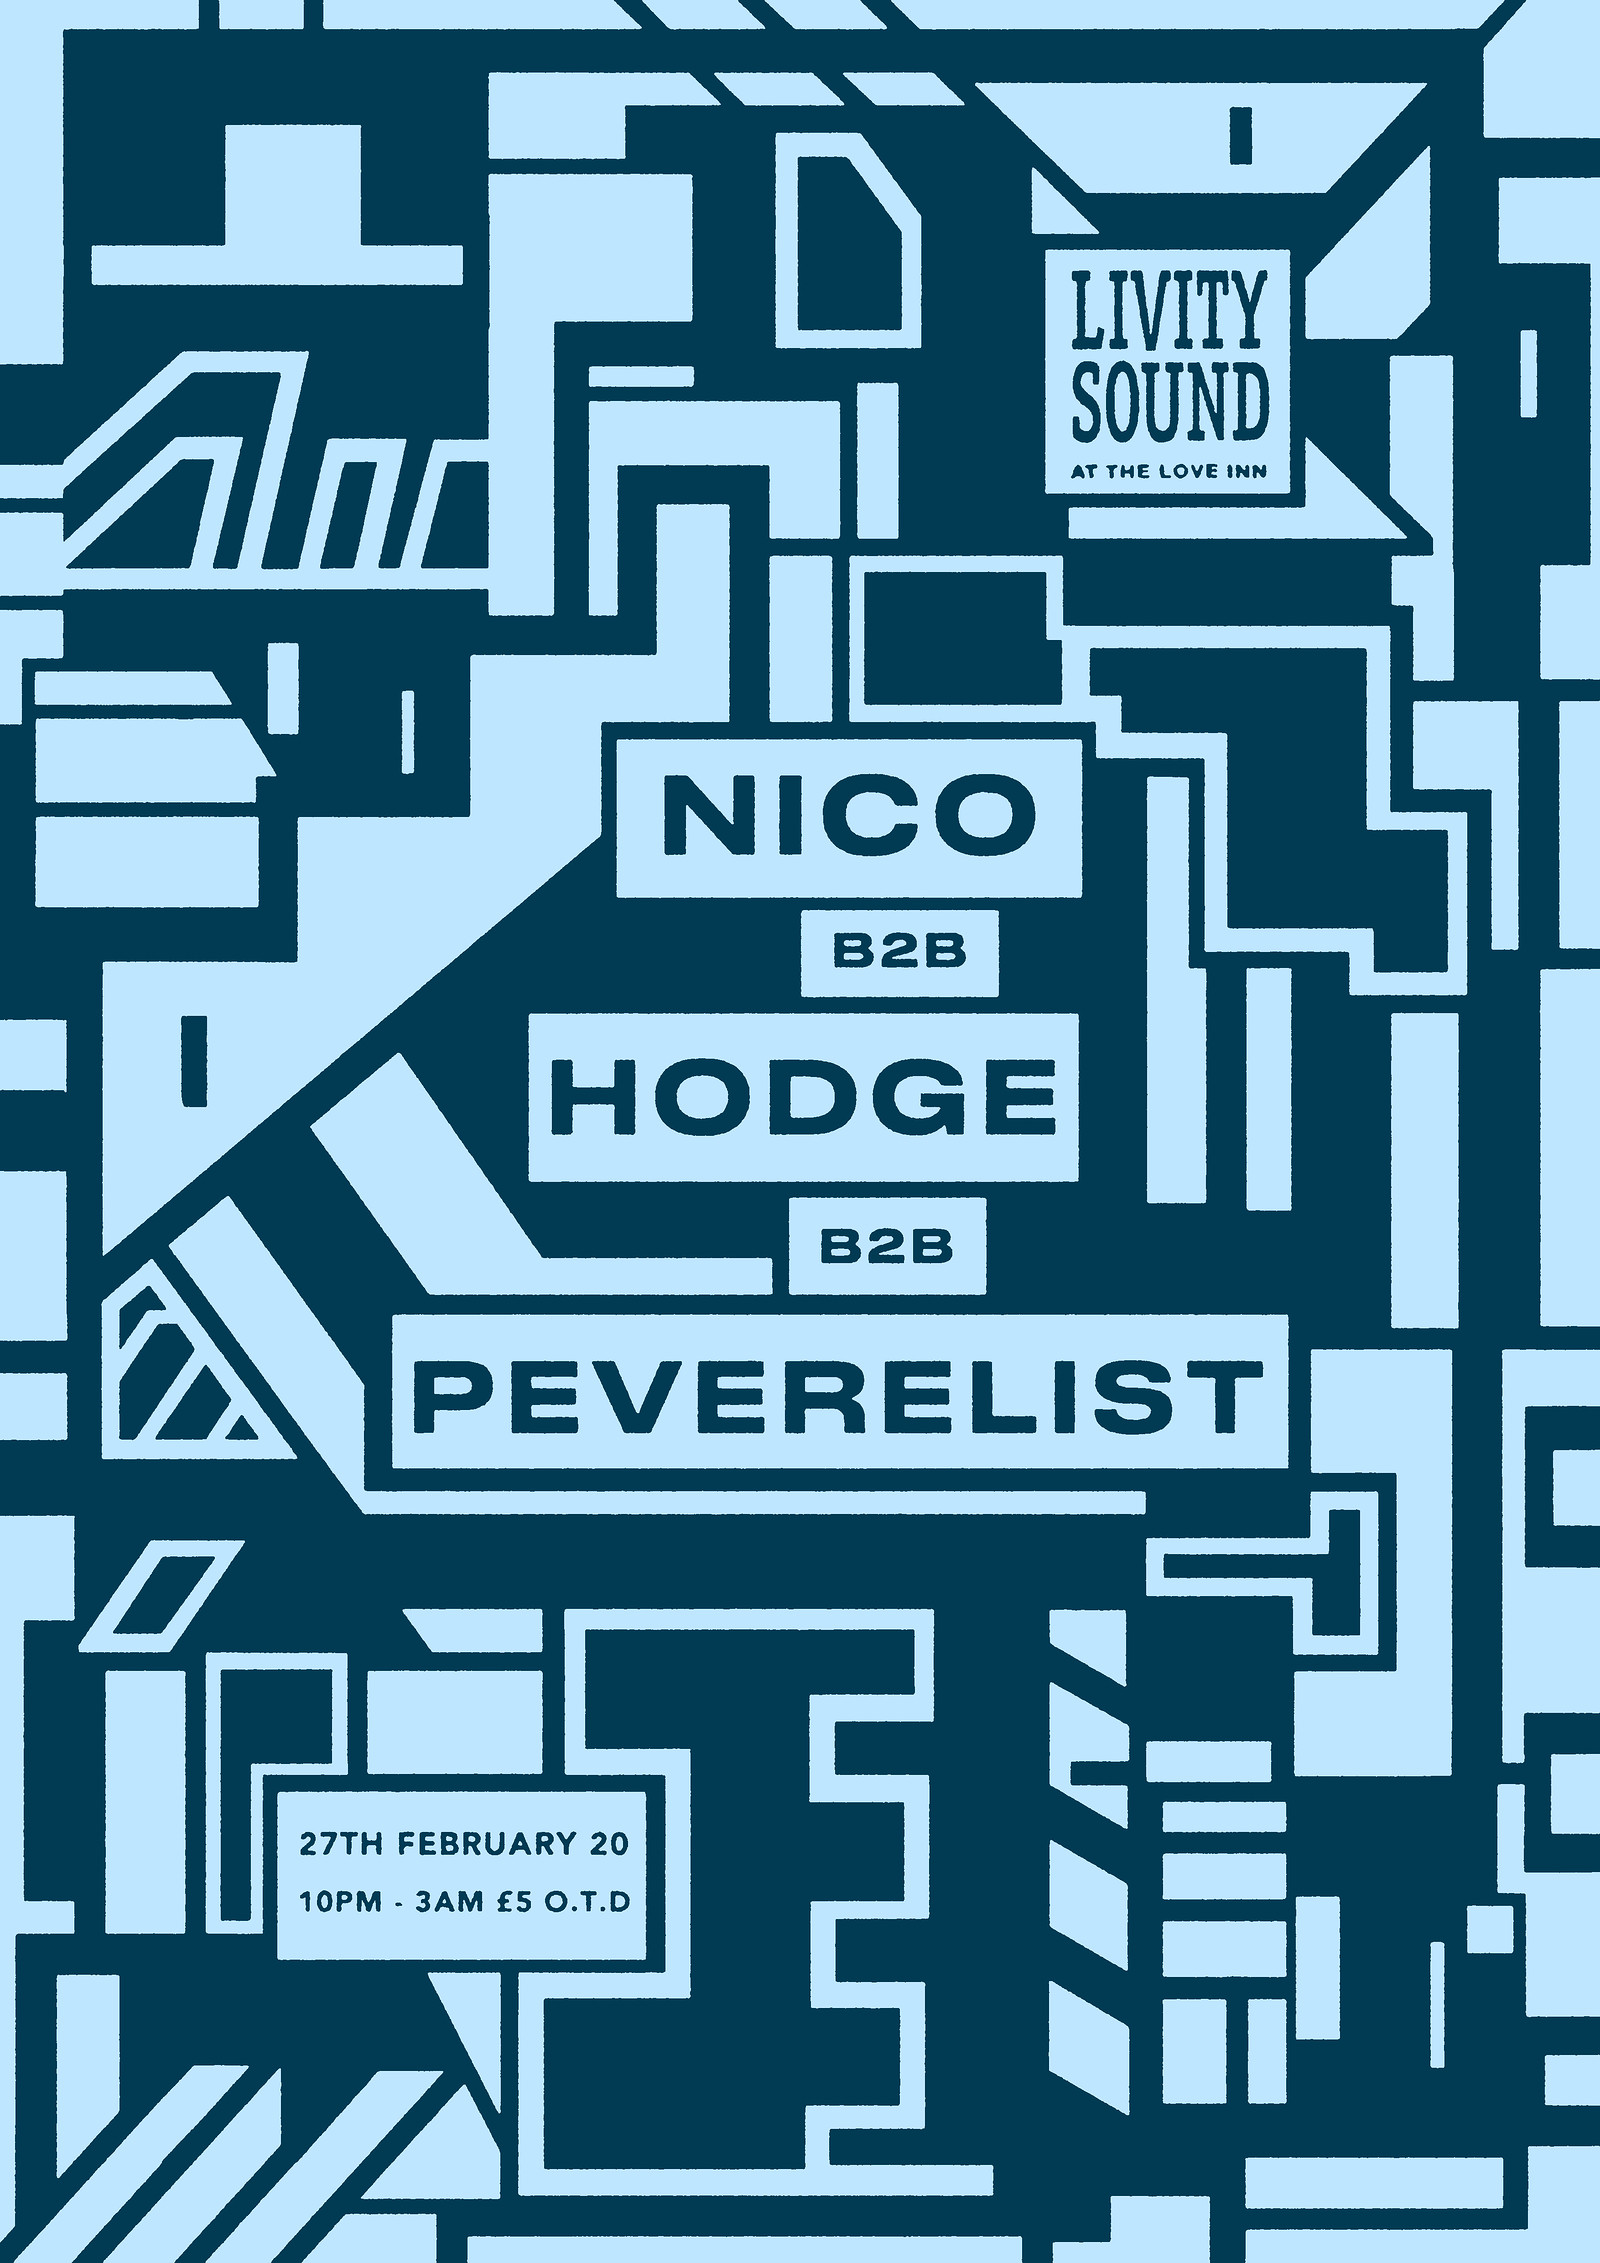 Livity Sound w/ Nico, Hodge & Peverelist at The Love Inn